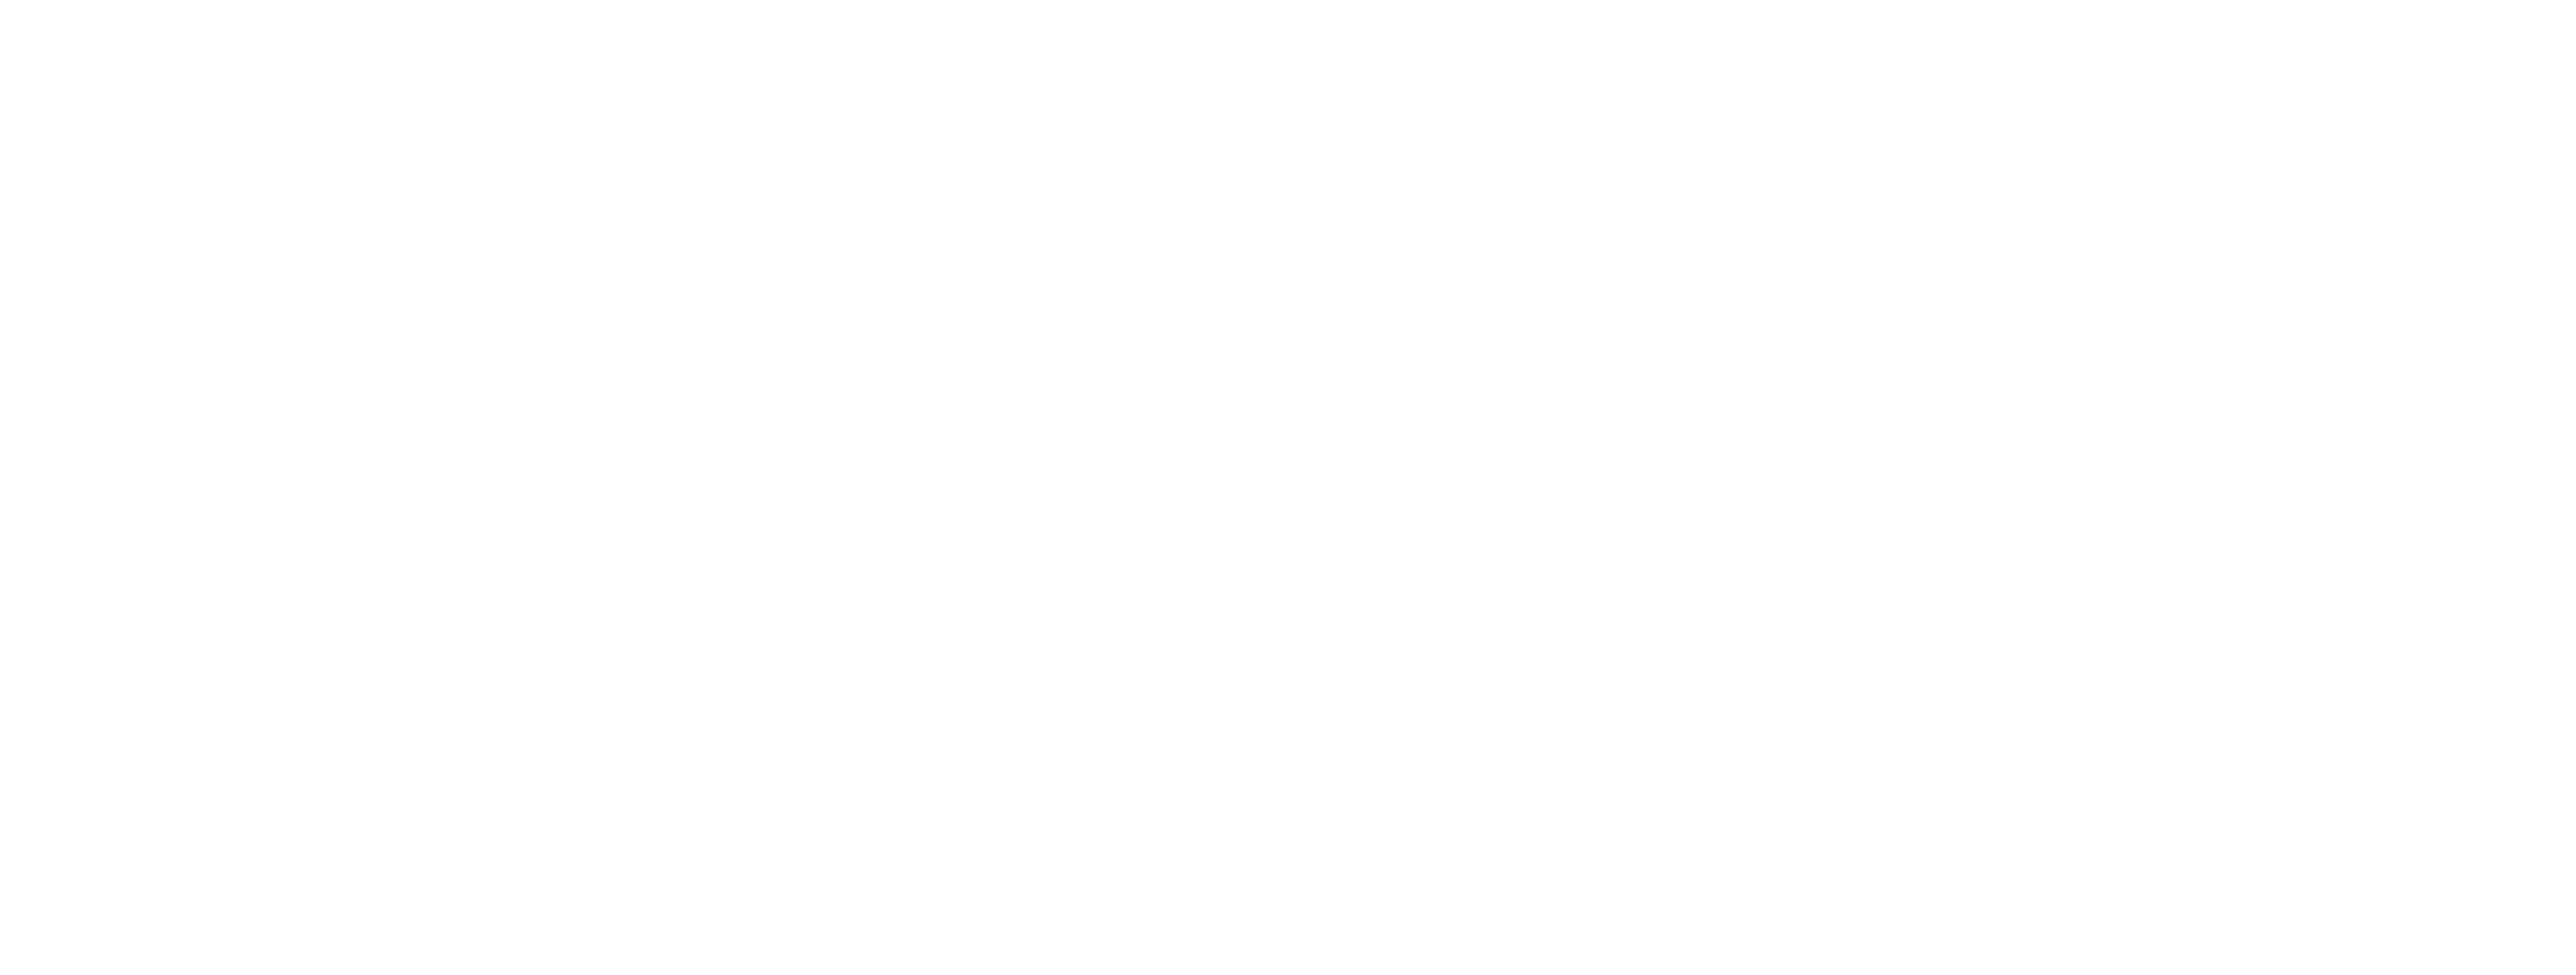 Reshet investigation